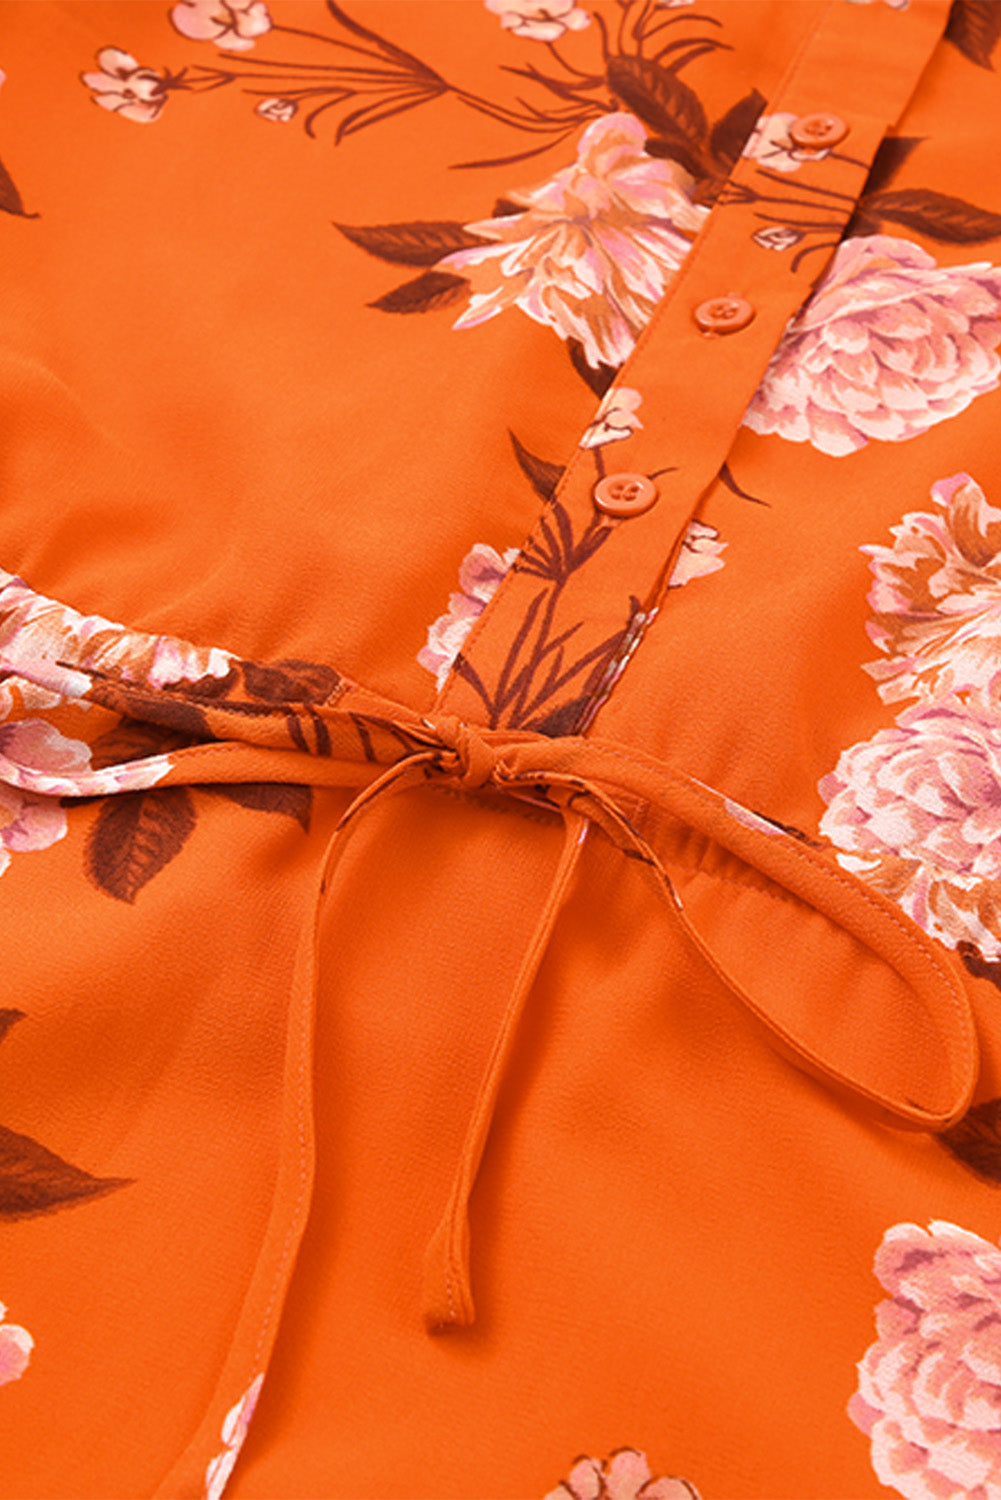 Vestido naranja con impresión floral manga larga